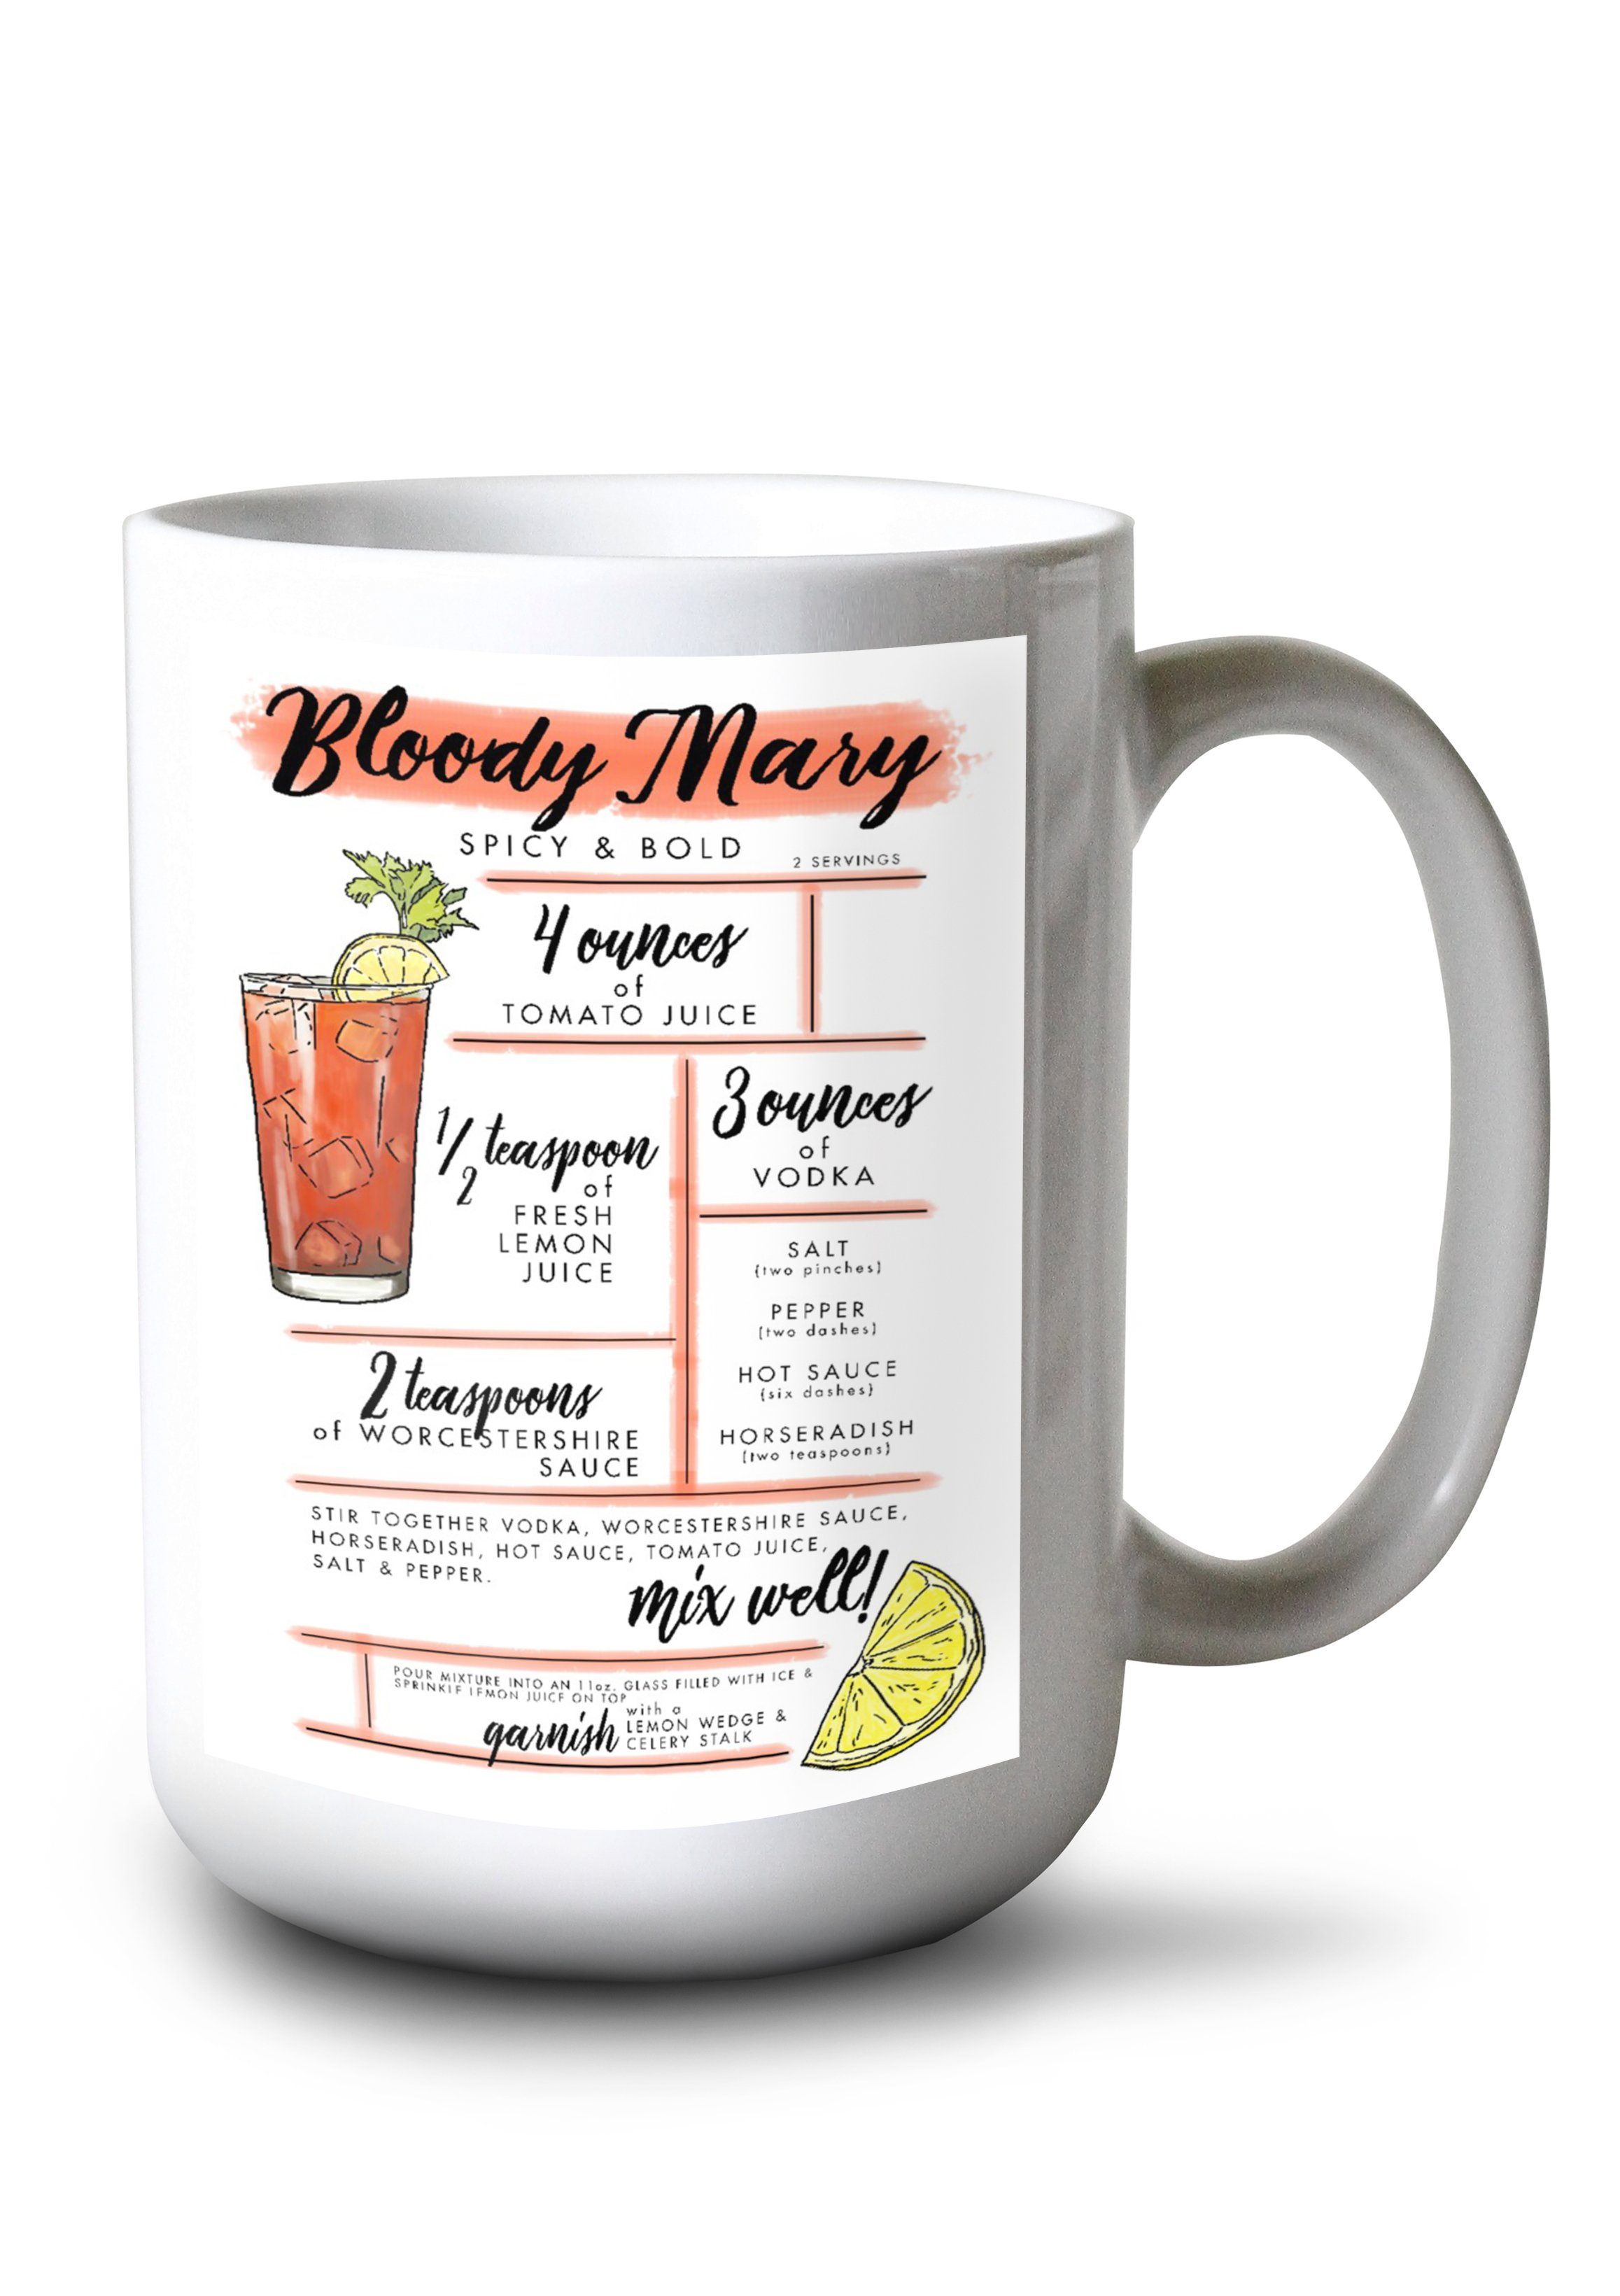 Bloody Mary, Cocktail Recipe, Lantern Press Artwork, Ceramic Mug